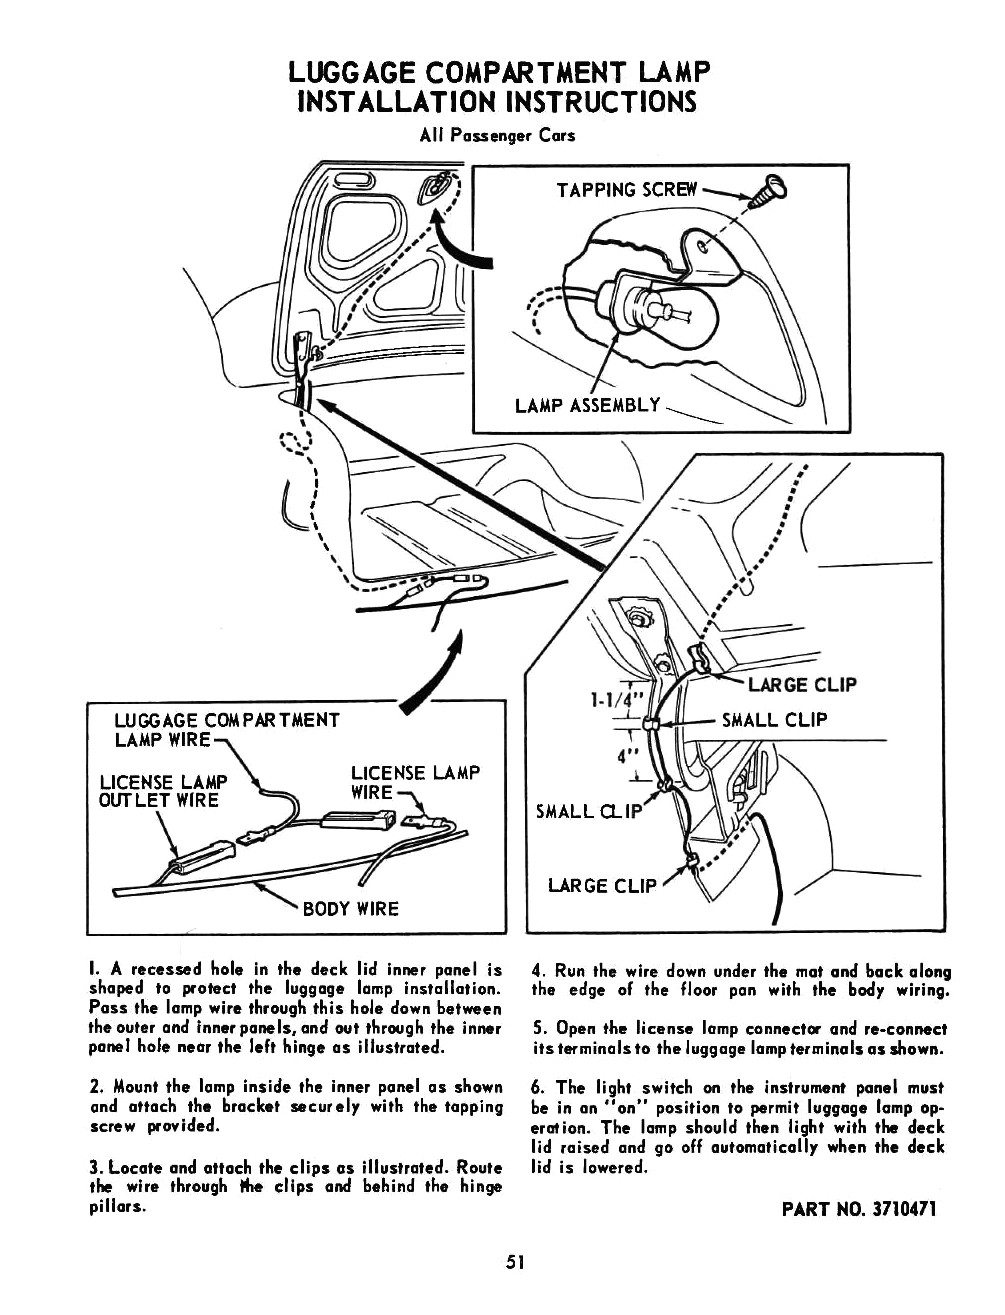 1955_Chevrolet_Acc_Manual-51